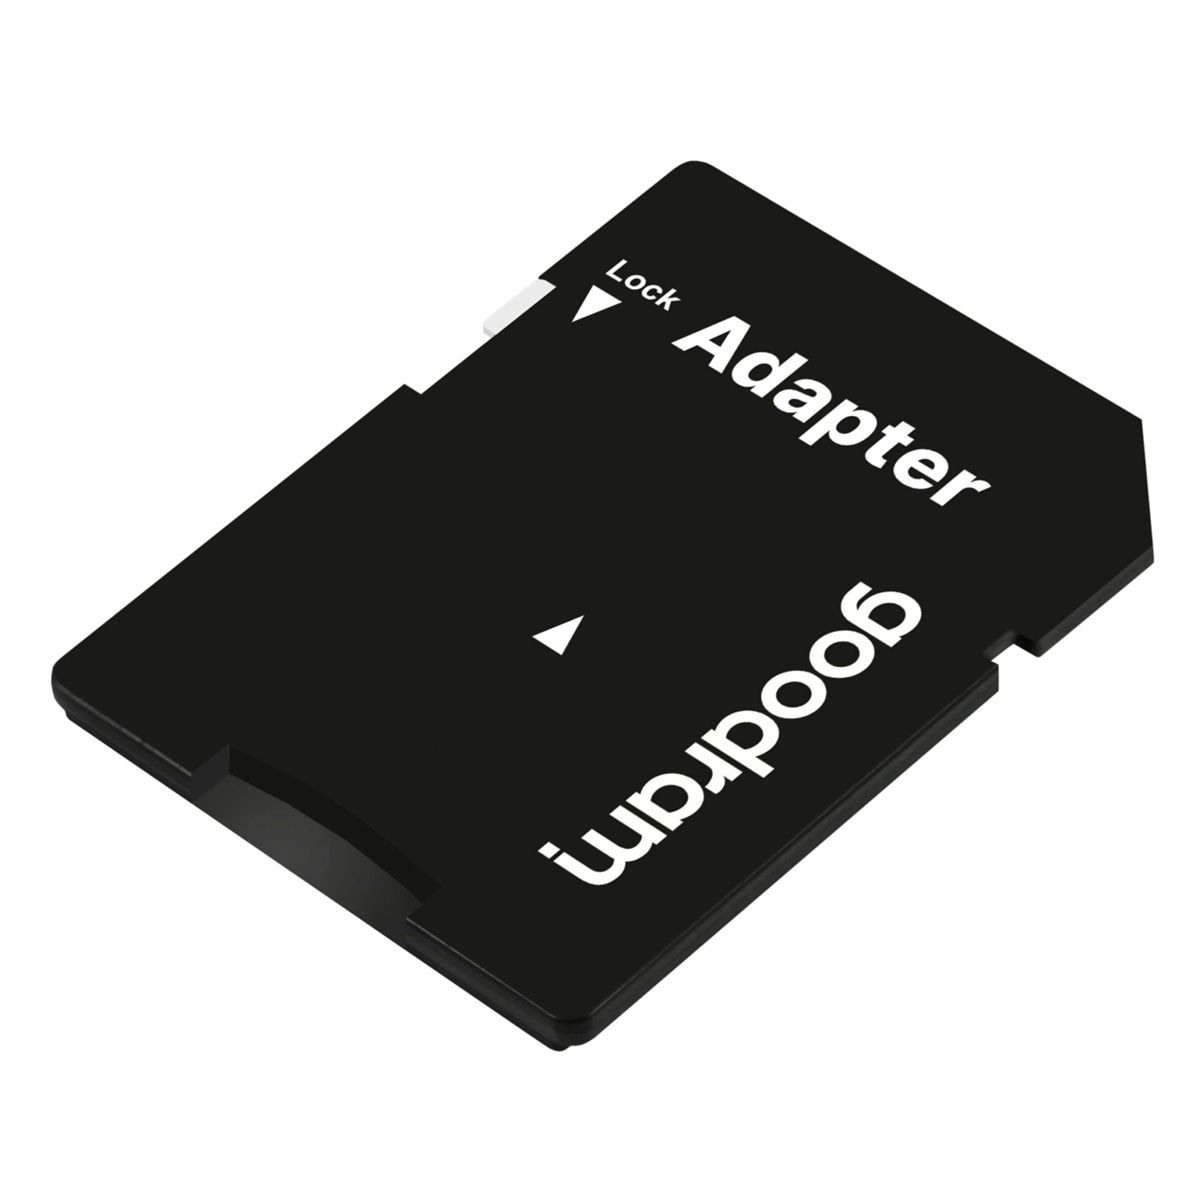 UHS-I 512GB GOODRAM U3 GB microSDXC + adapter, V30 IRDM 512 Micro-SDXC Speicherkarte,